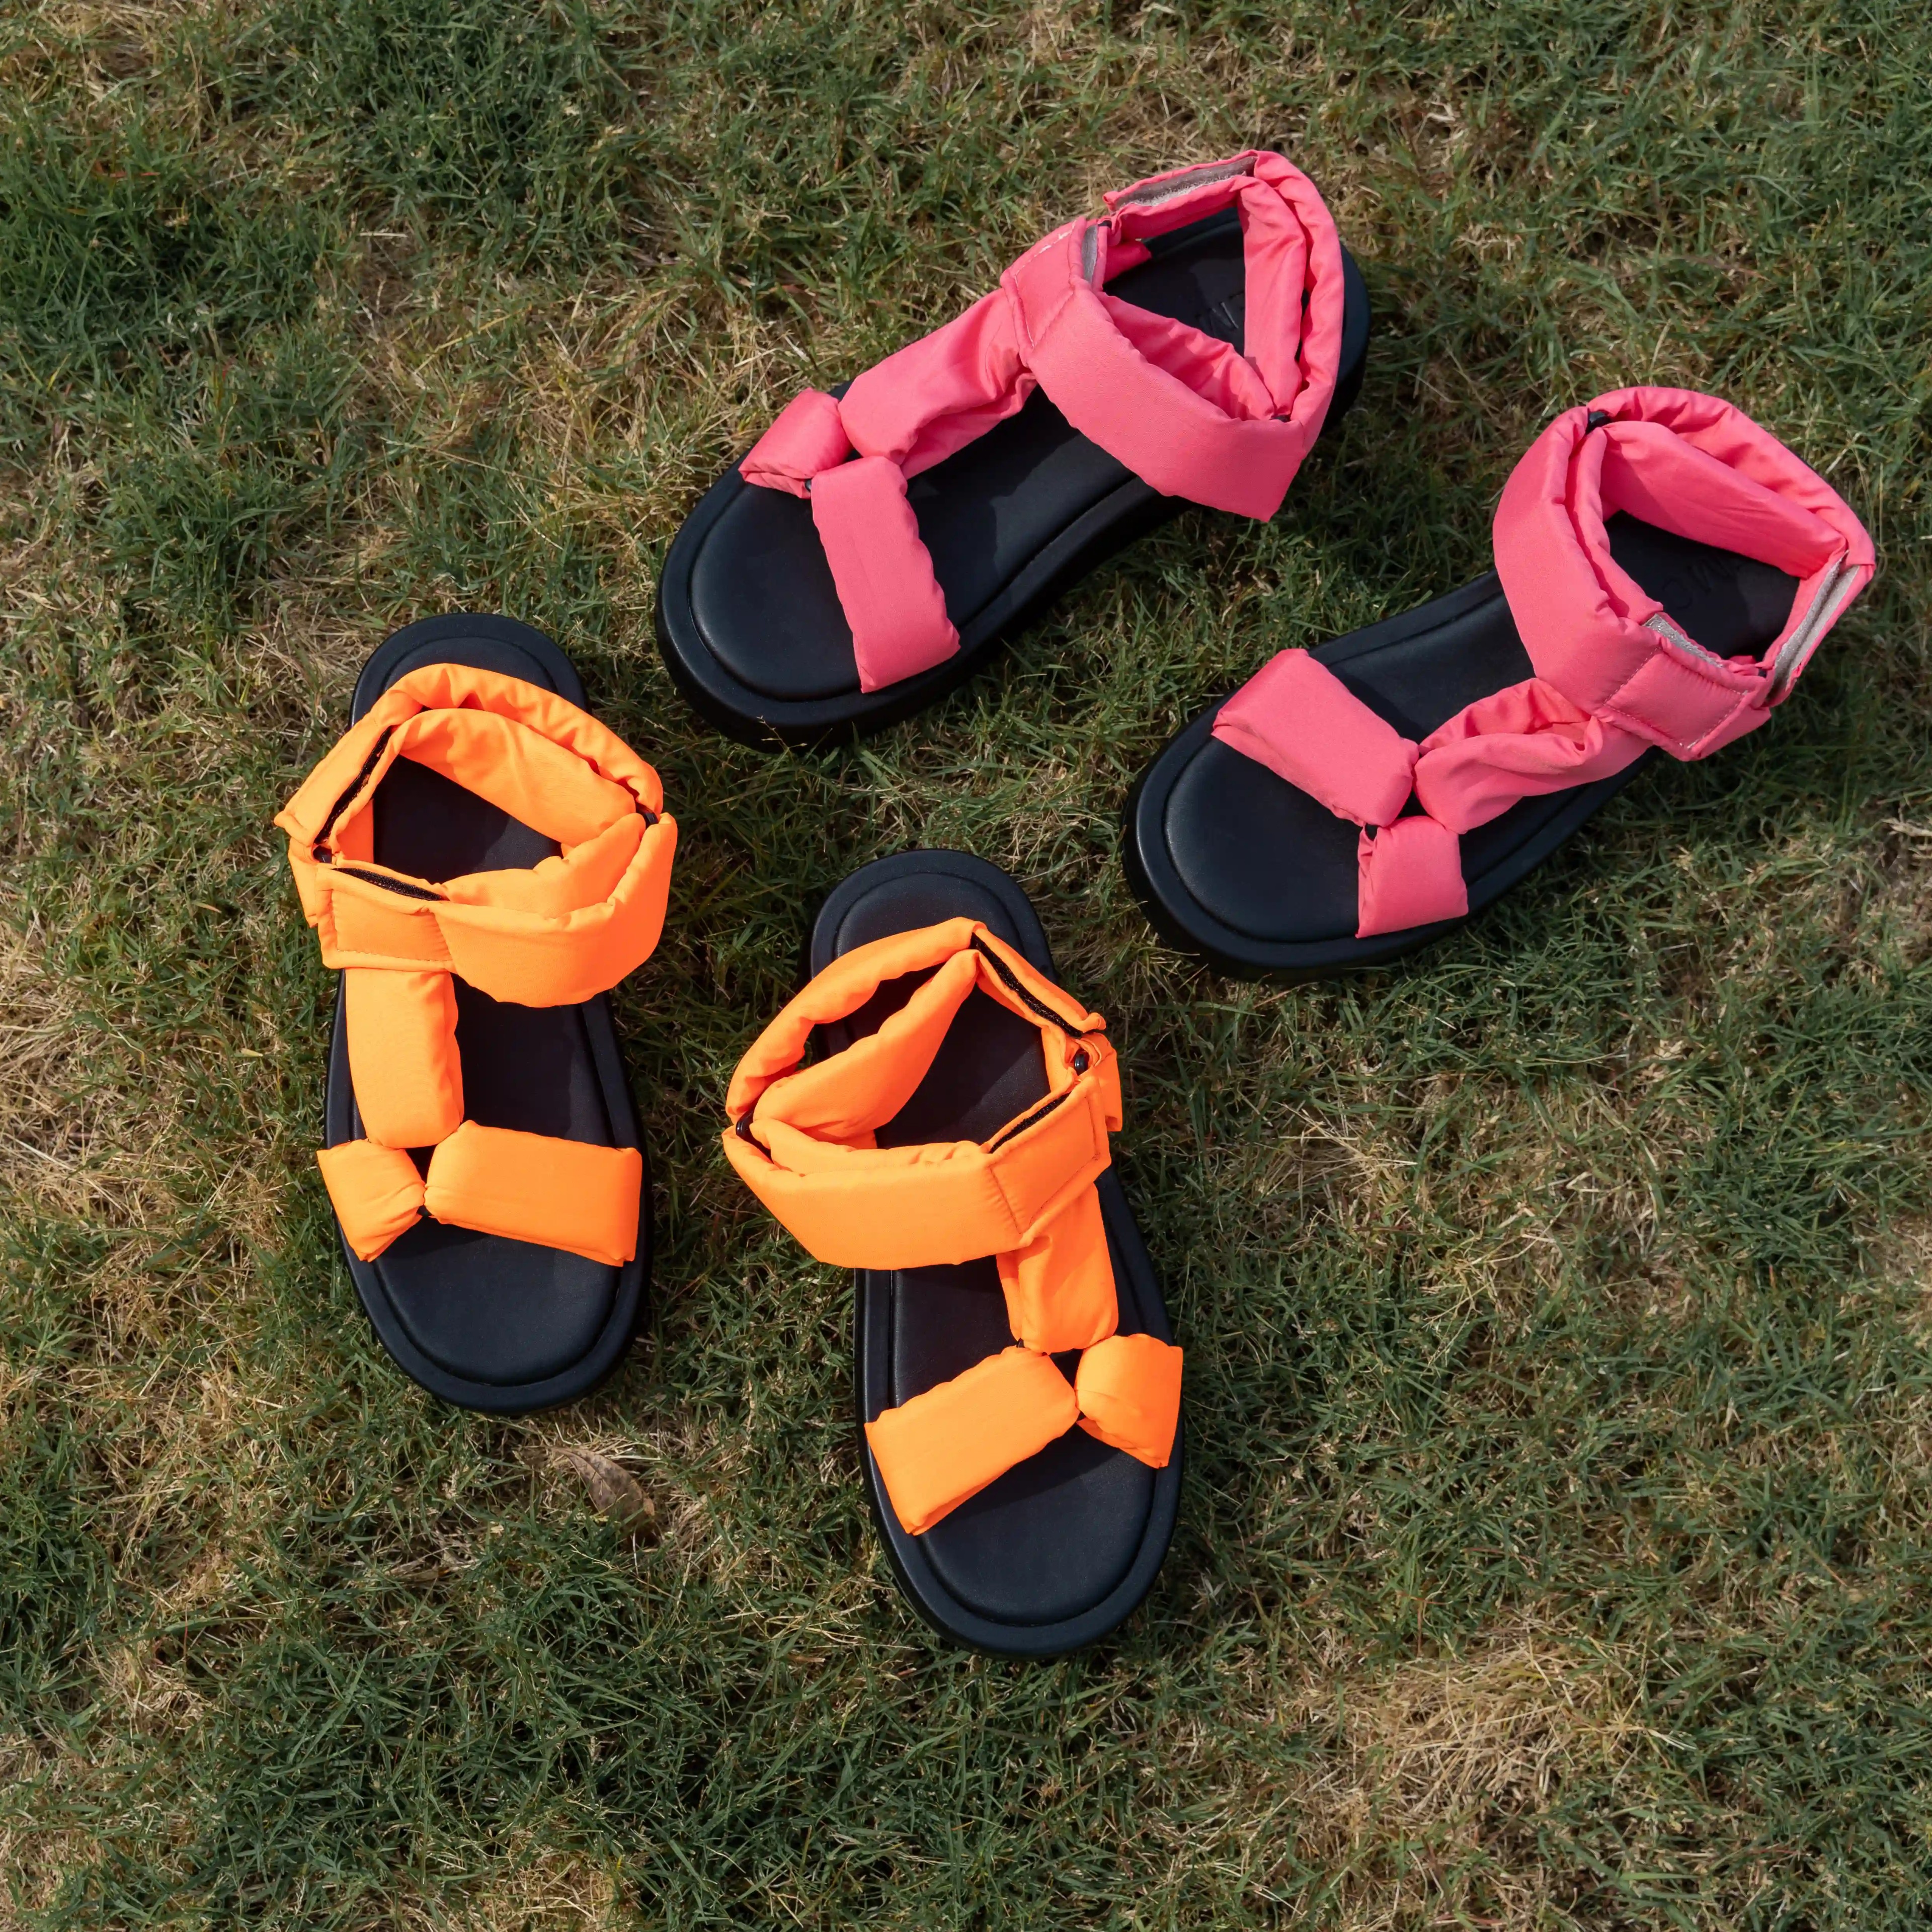 Parachute Fabric Thick Comfortable Sole Sandals - Orange